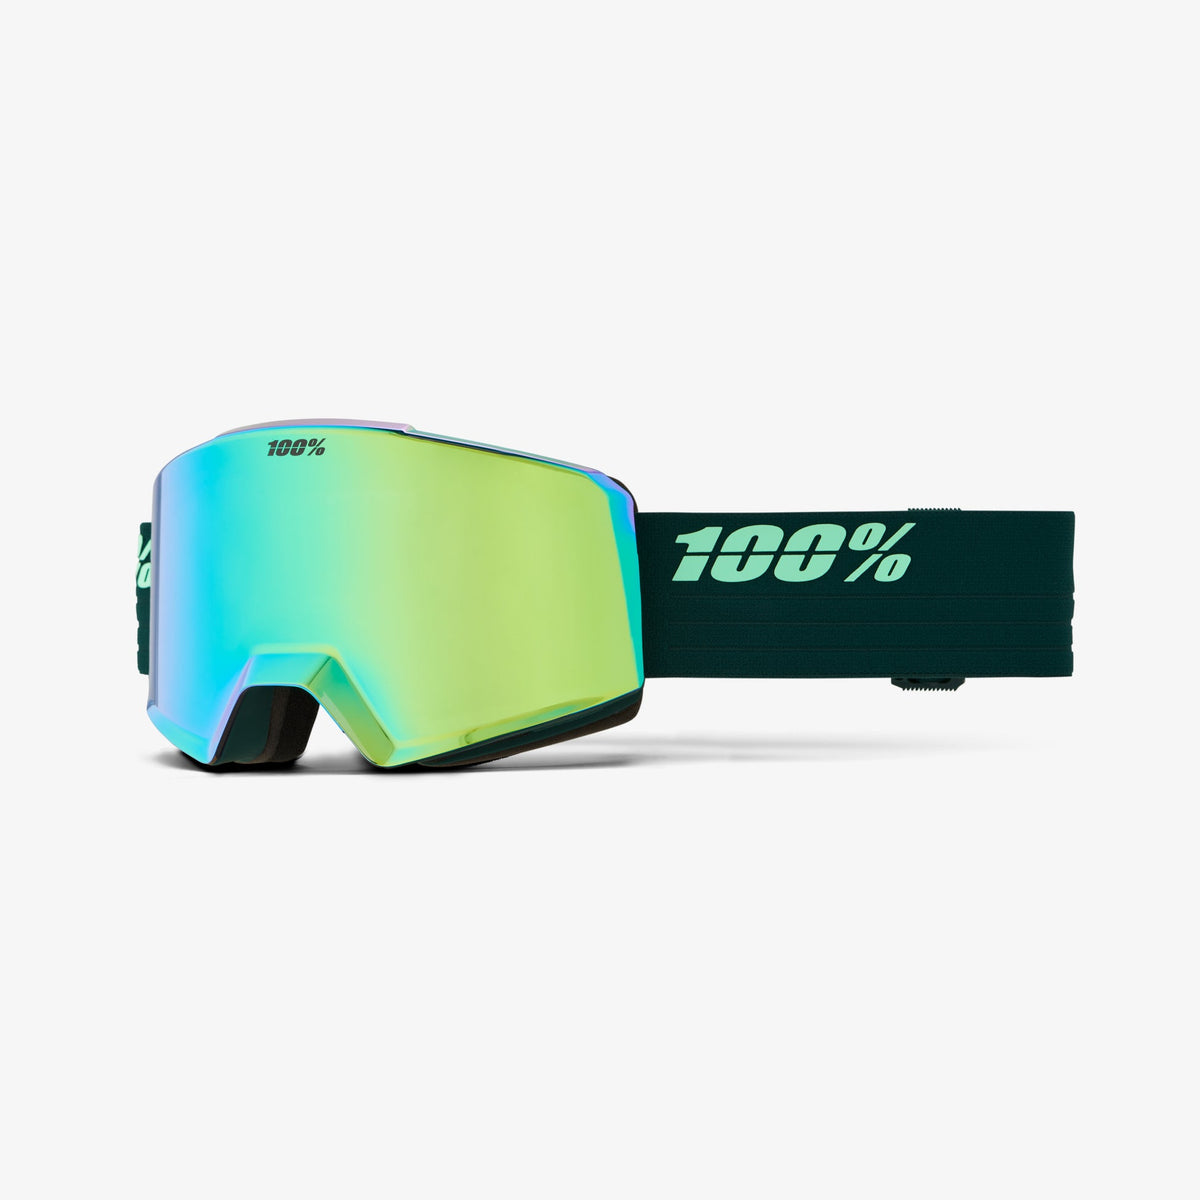 100% SNOW / Chameleon / HiPER Green Mirror